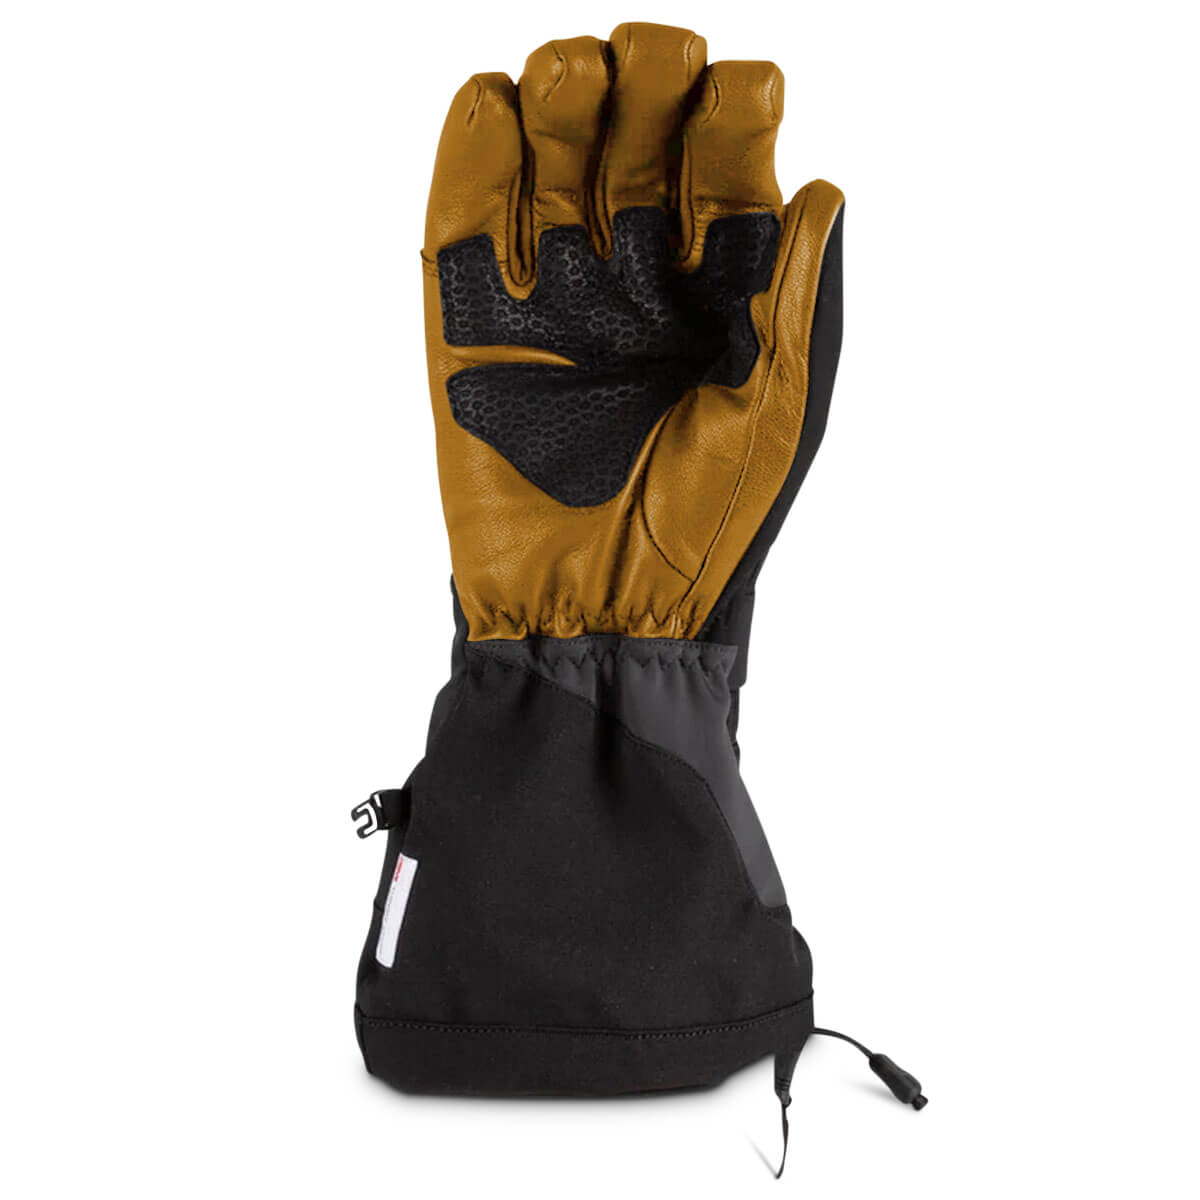 Backcountry Gloves – 509